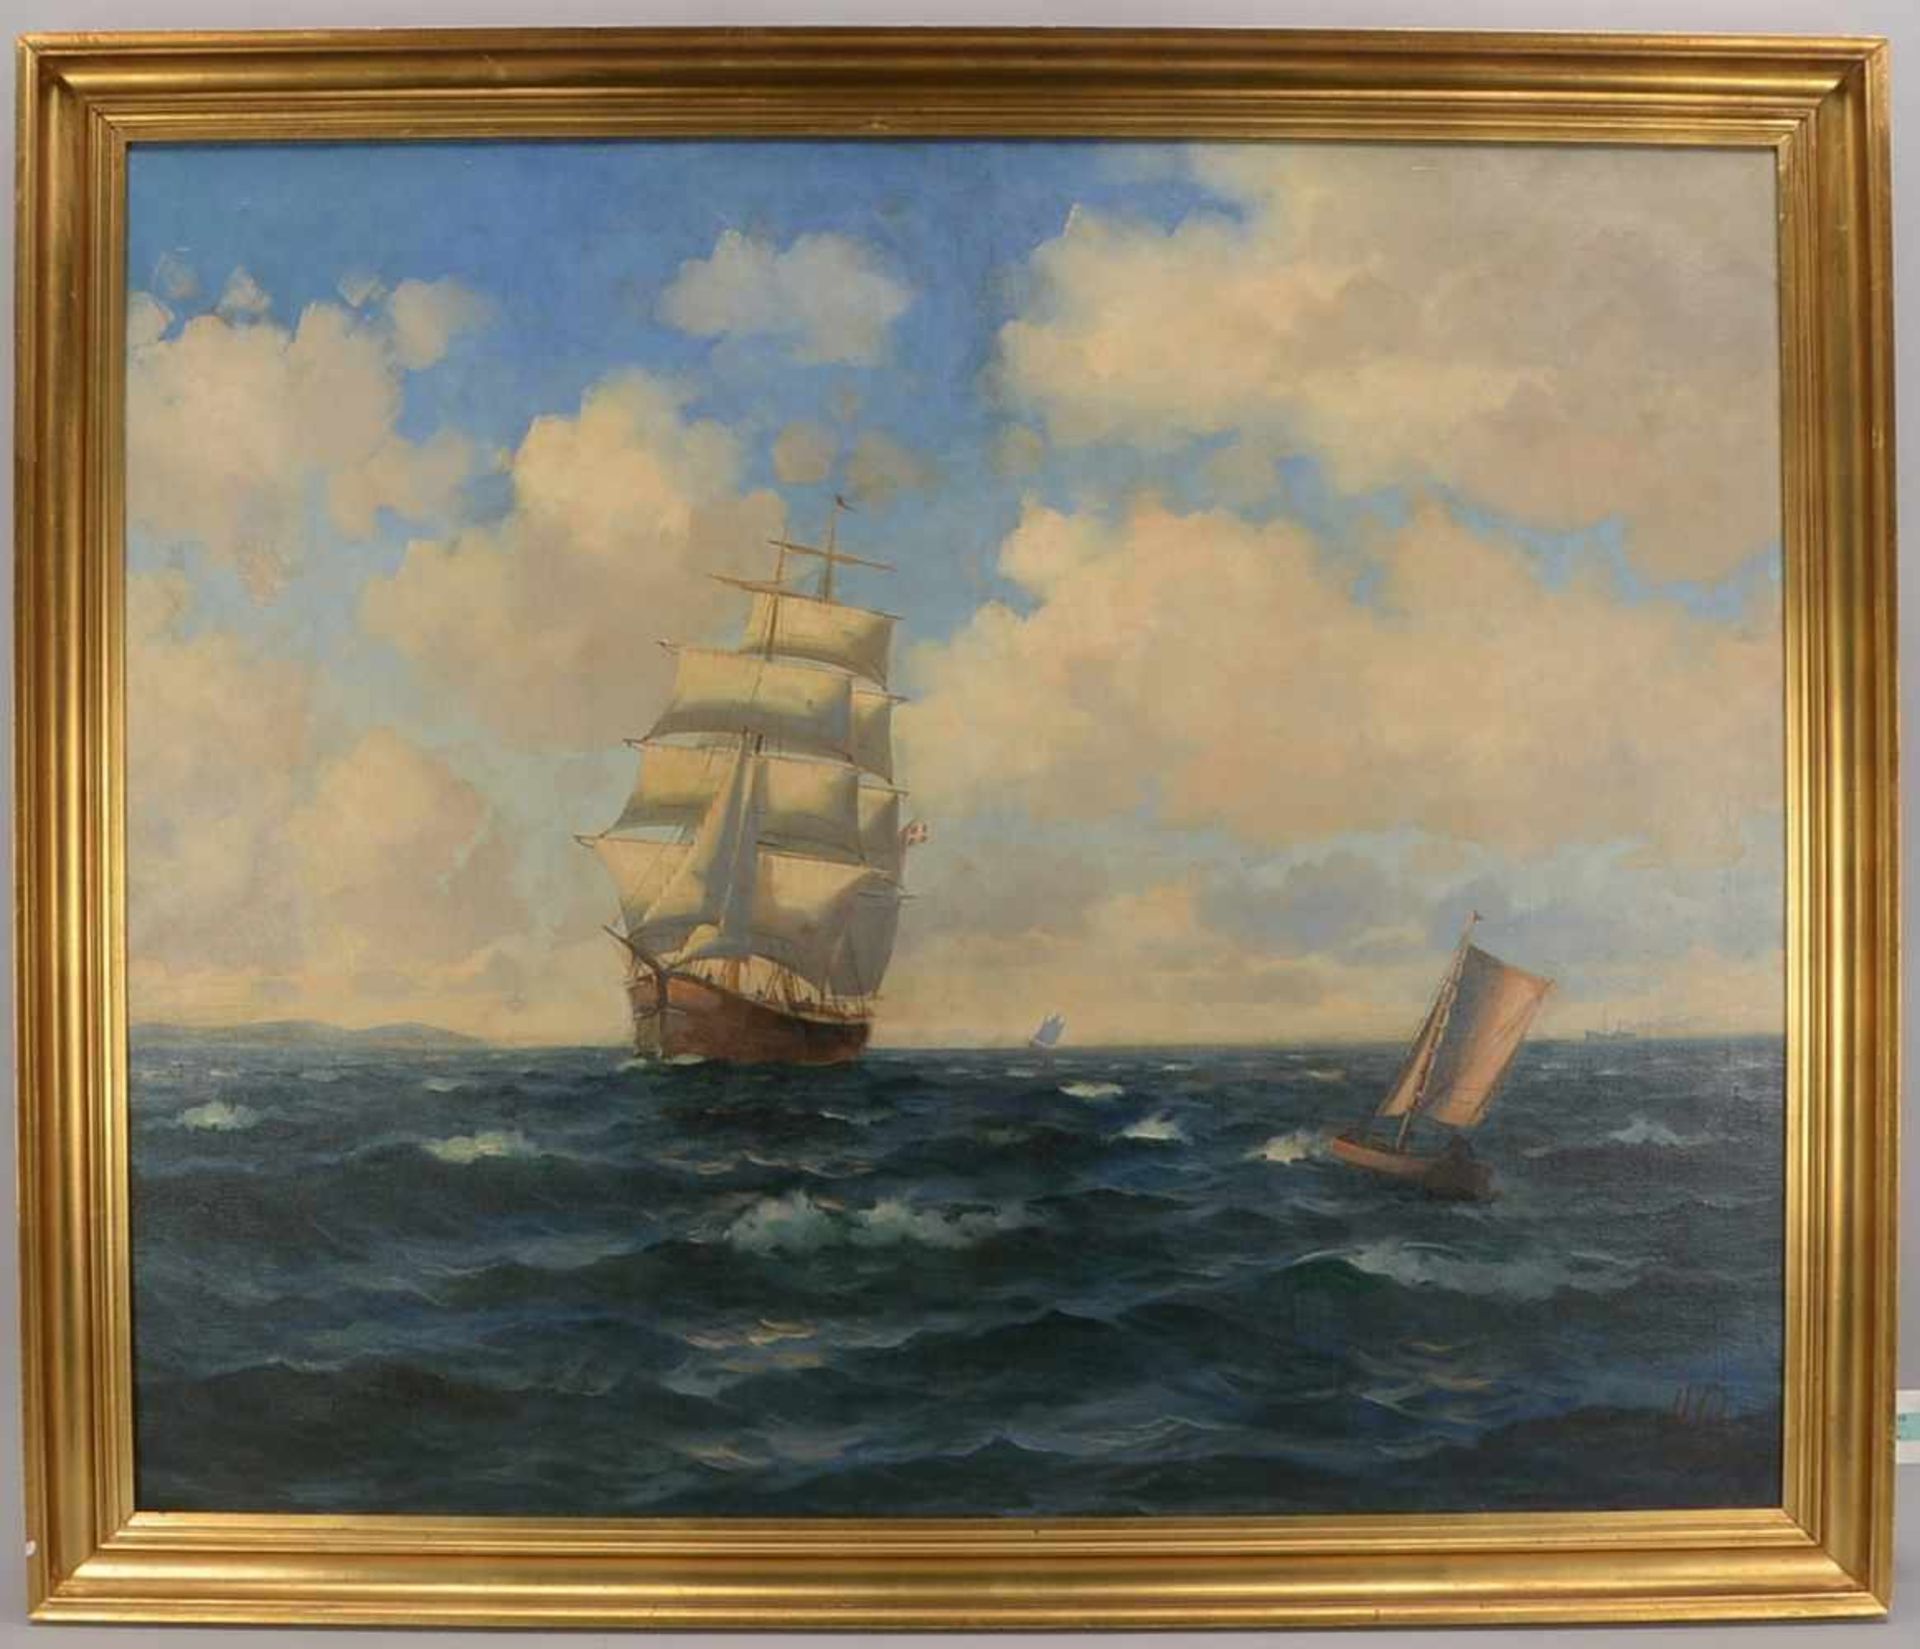 Gemälde, 'Segelschiff in voller Fahrt', Öl/Lw, unten rechts monogrammiert 'WB'; Bildmaße 101 x 121